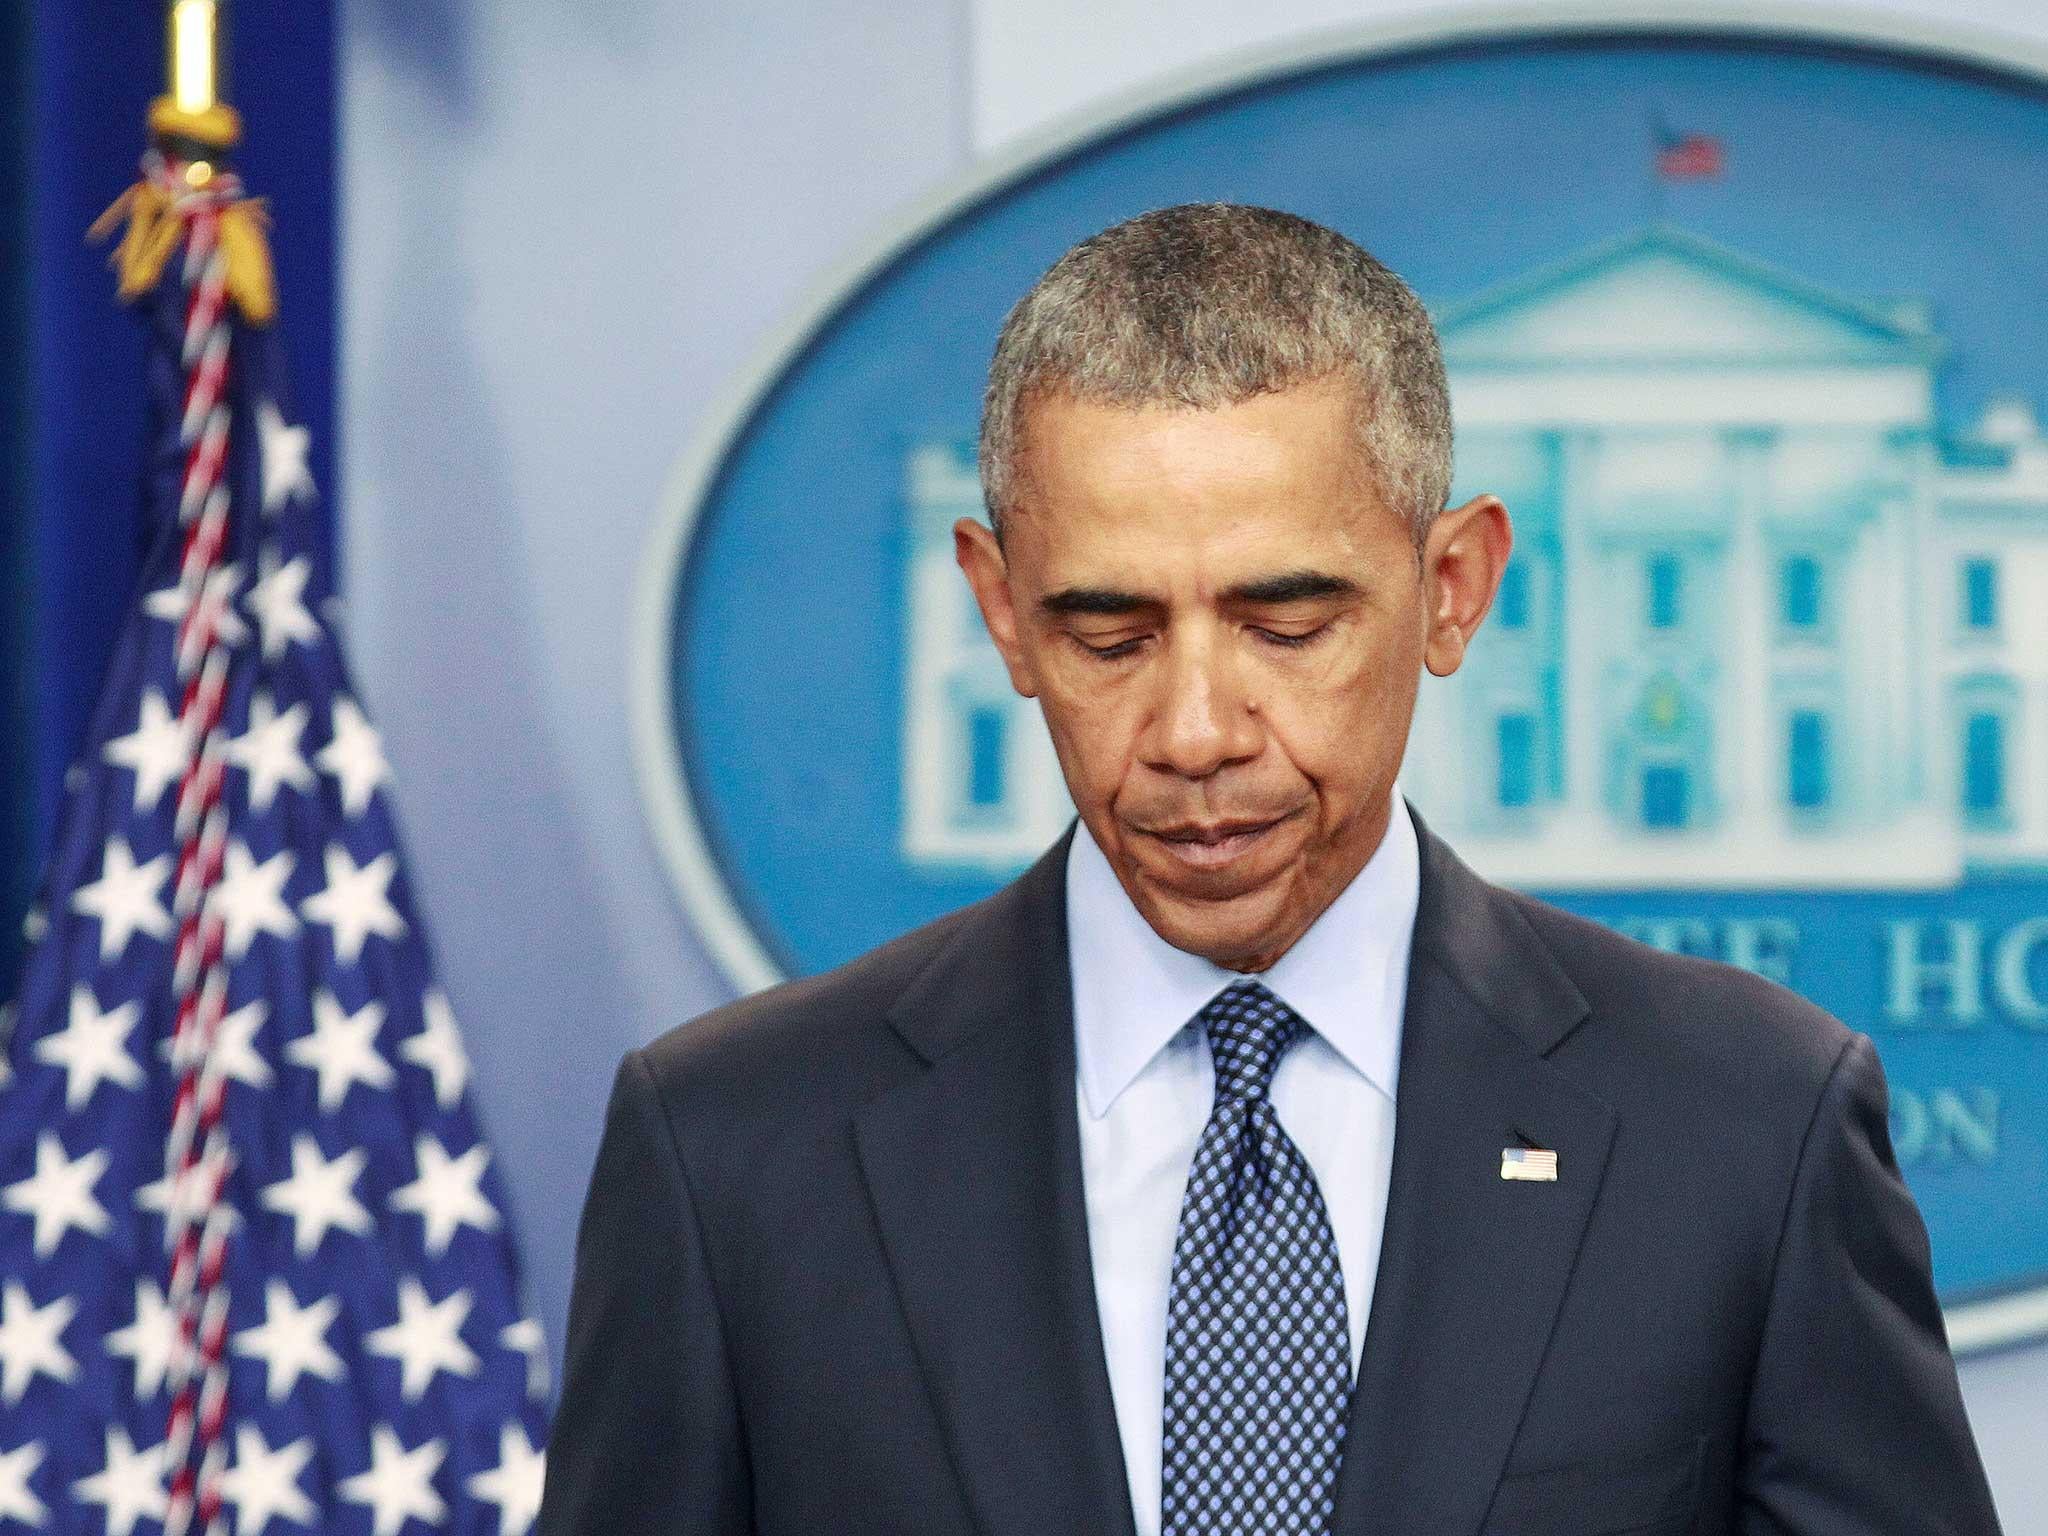 President Obama will visit Orlando on Thursday